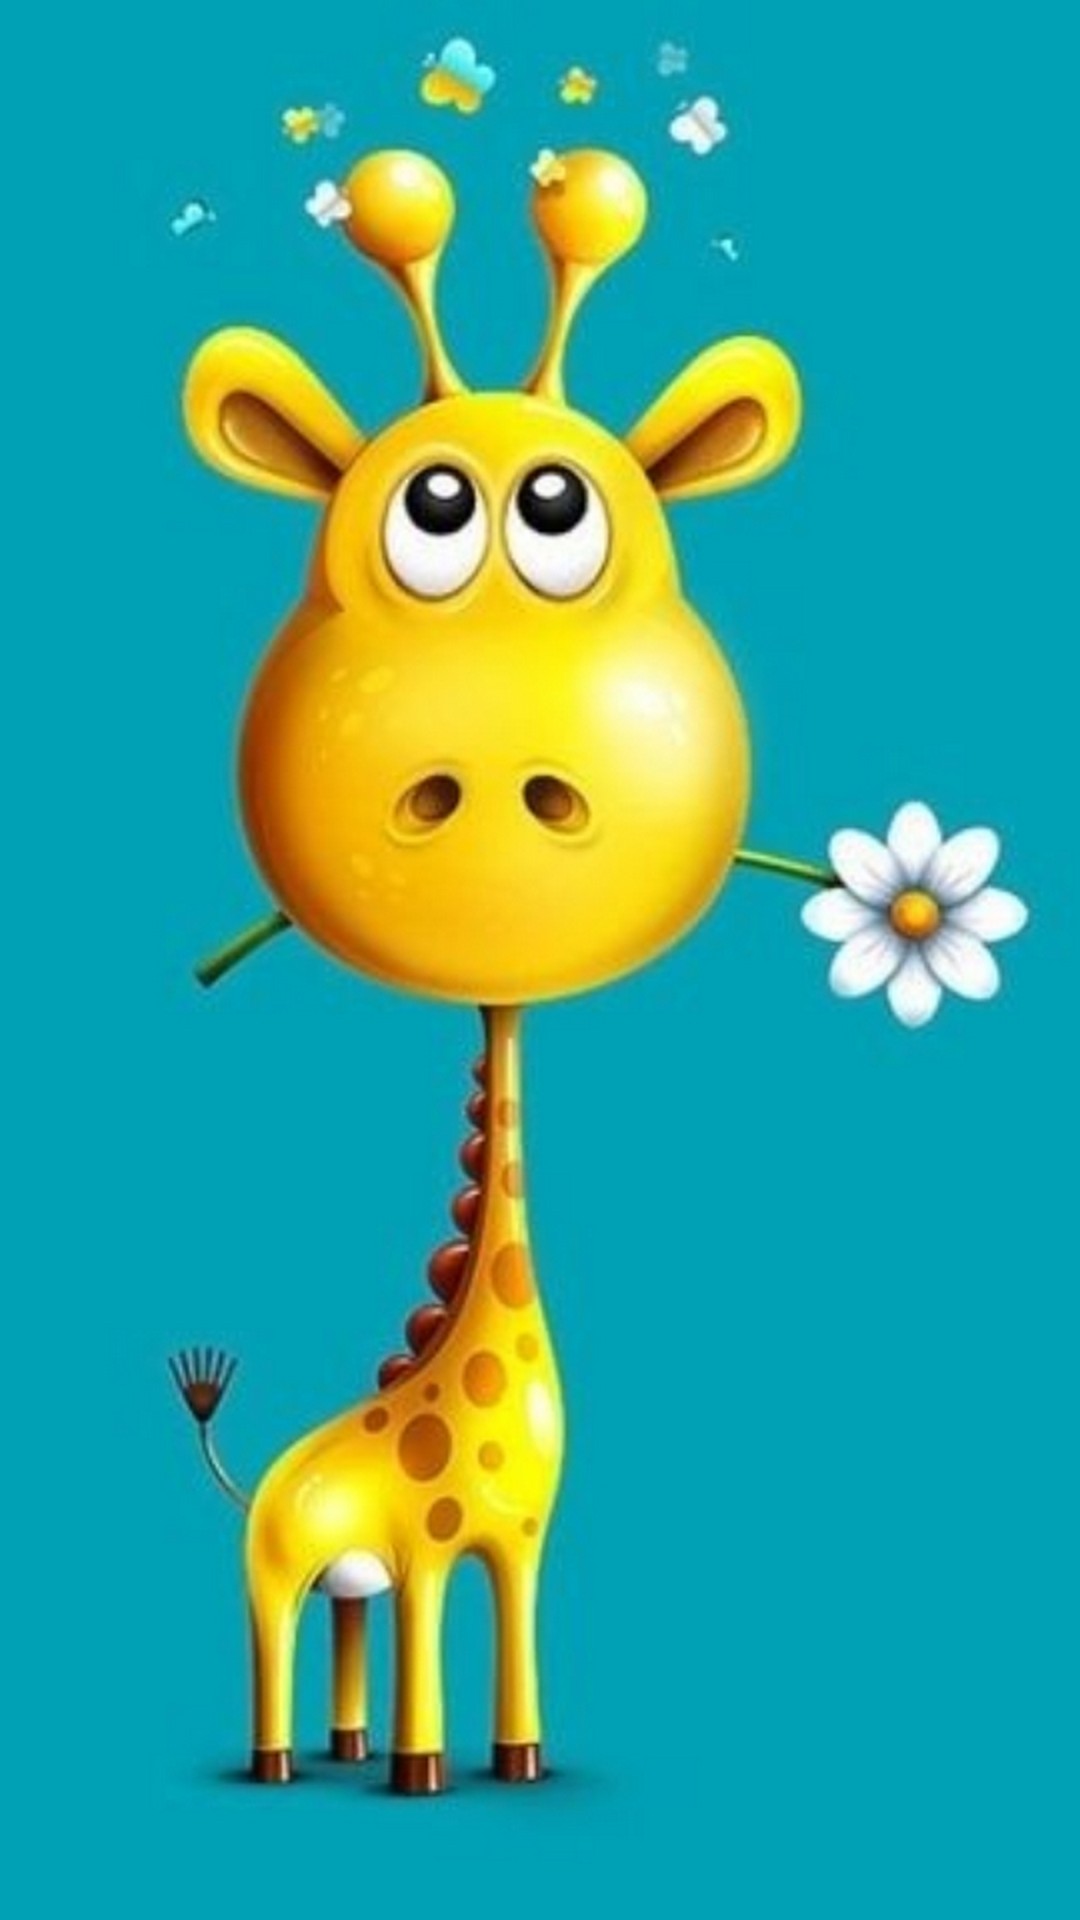 Animated Giraffe Wallpaper iPhone | 2021 Cute Wallpapers